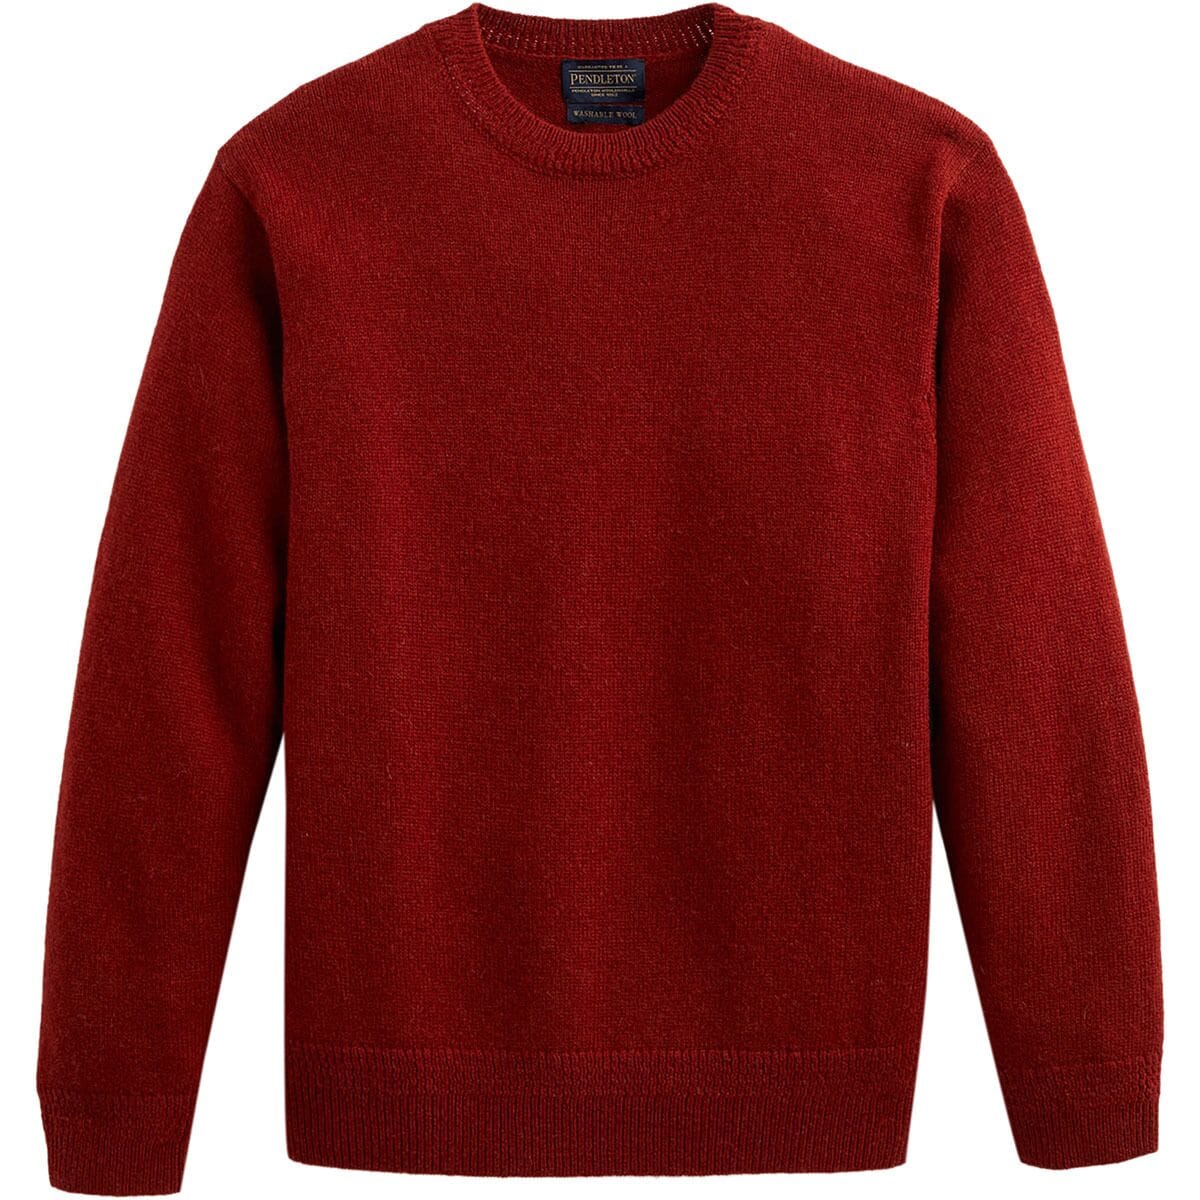 Shetland Crew Sweater - Men